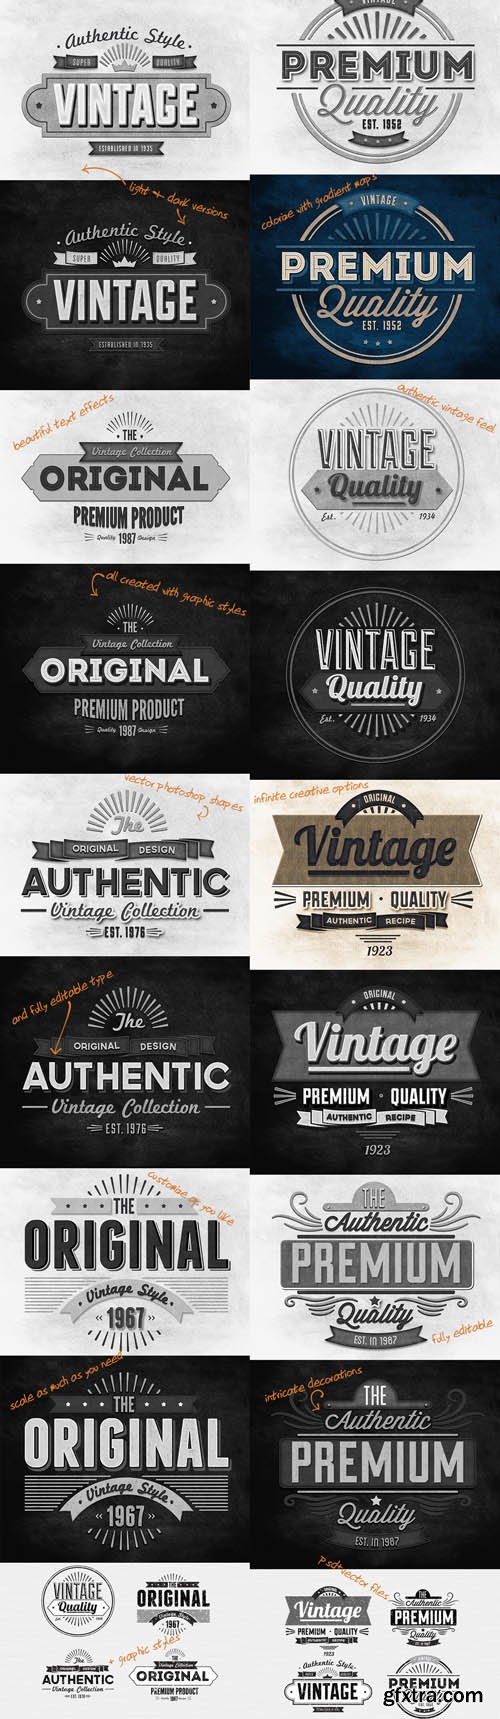 Super premium vintage typography #2 Type Insignias - Stock Vector